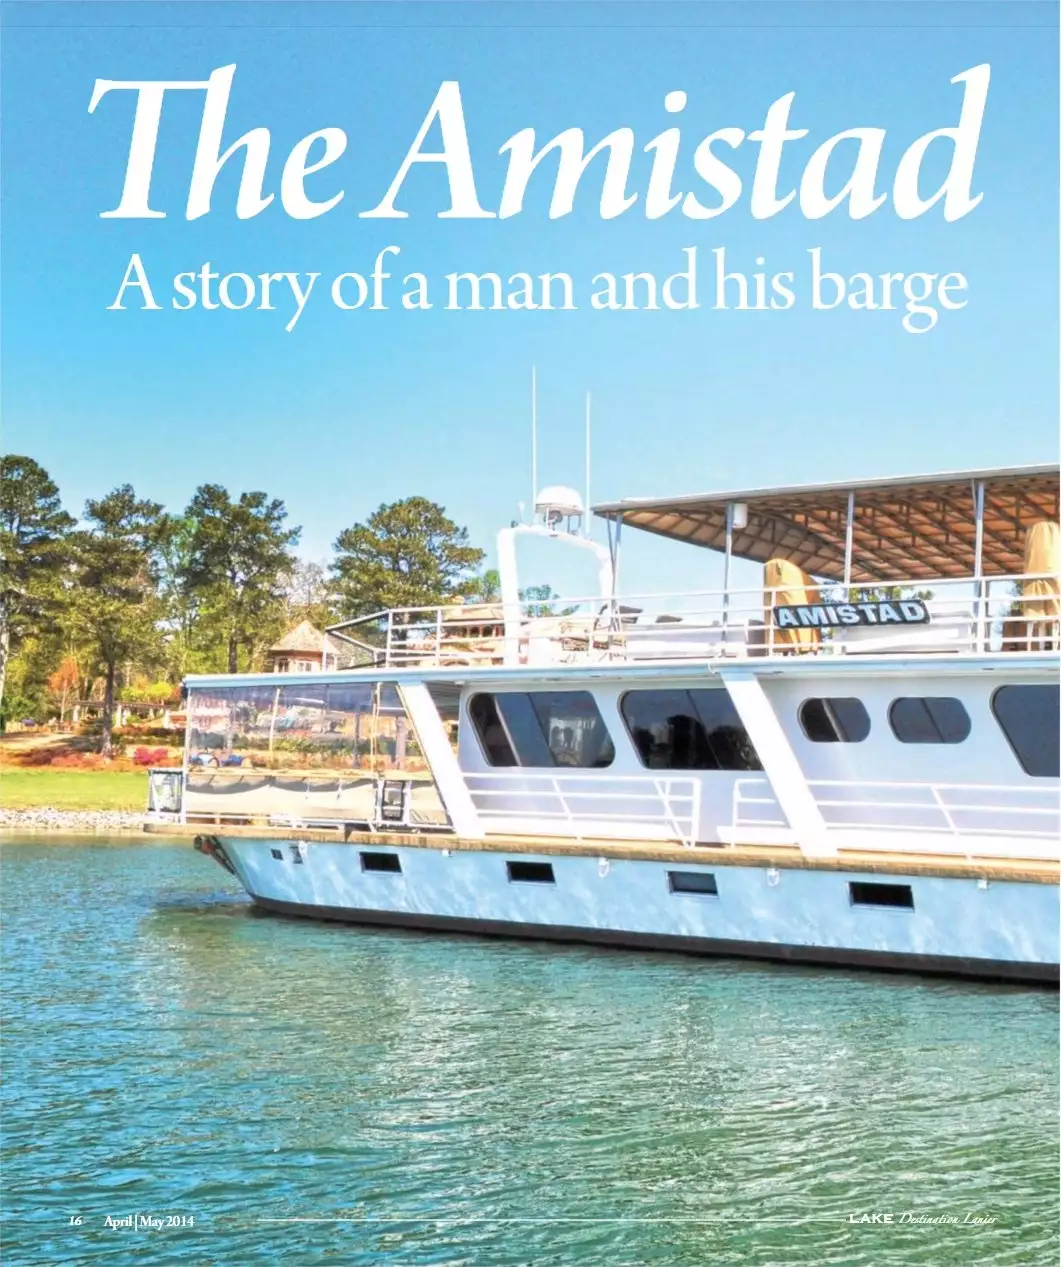 jacht Amistad (eigenaar Tommy Bagwell)